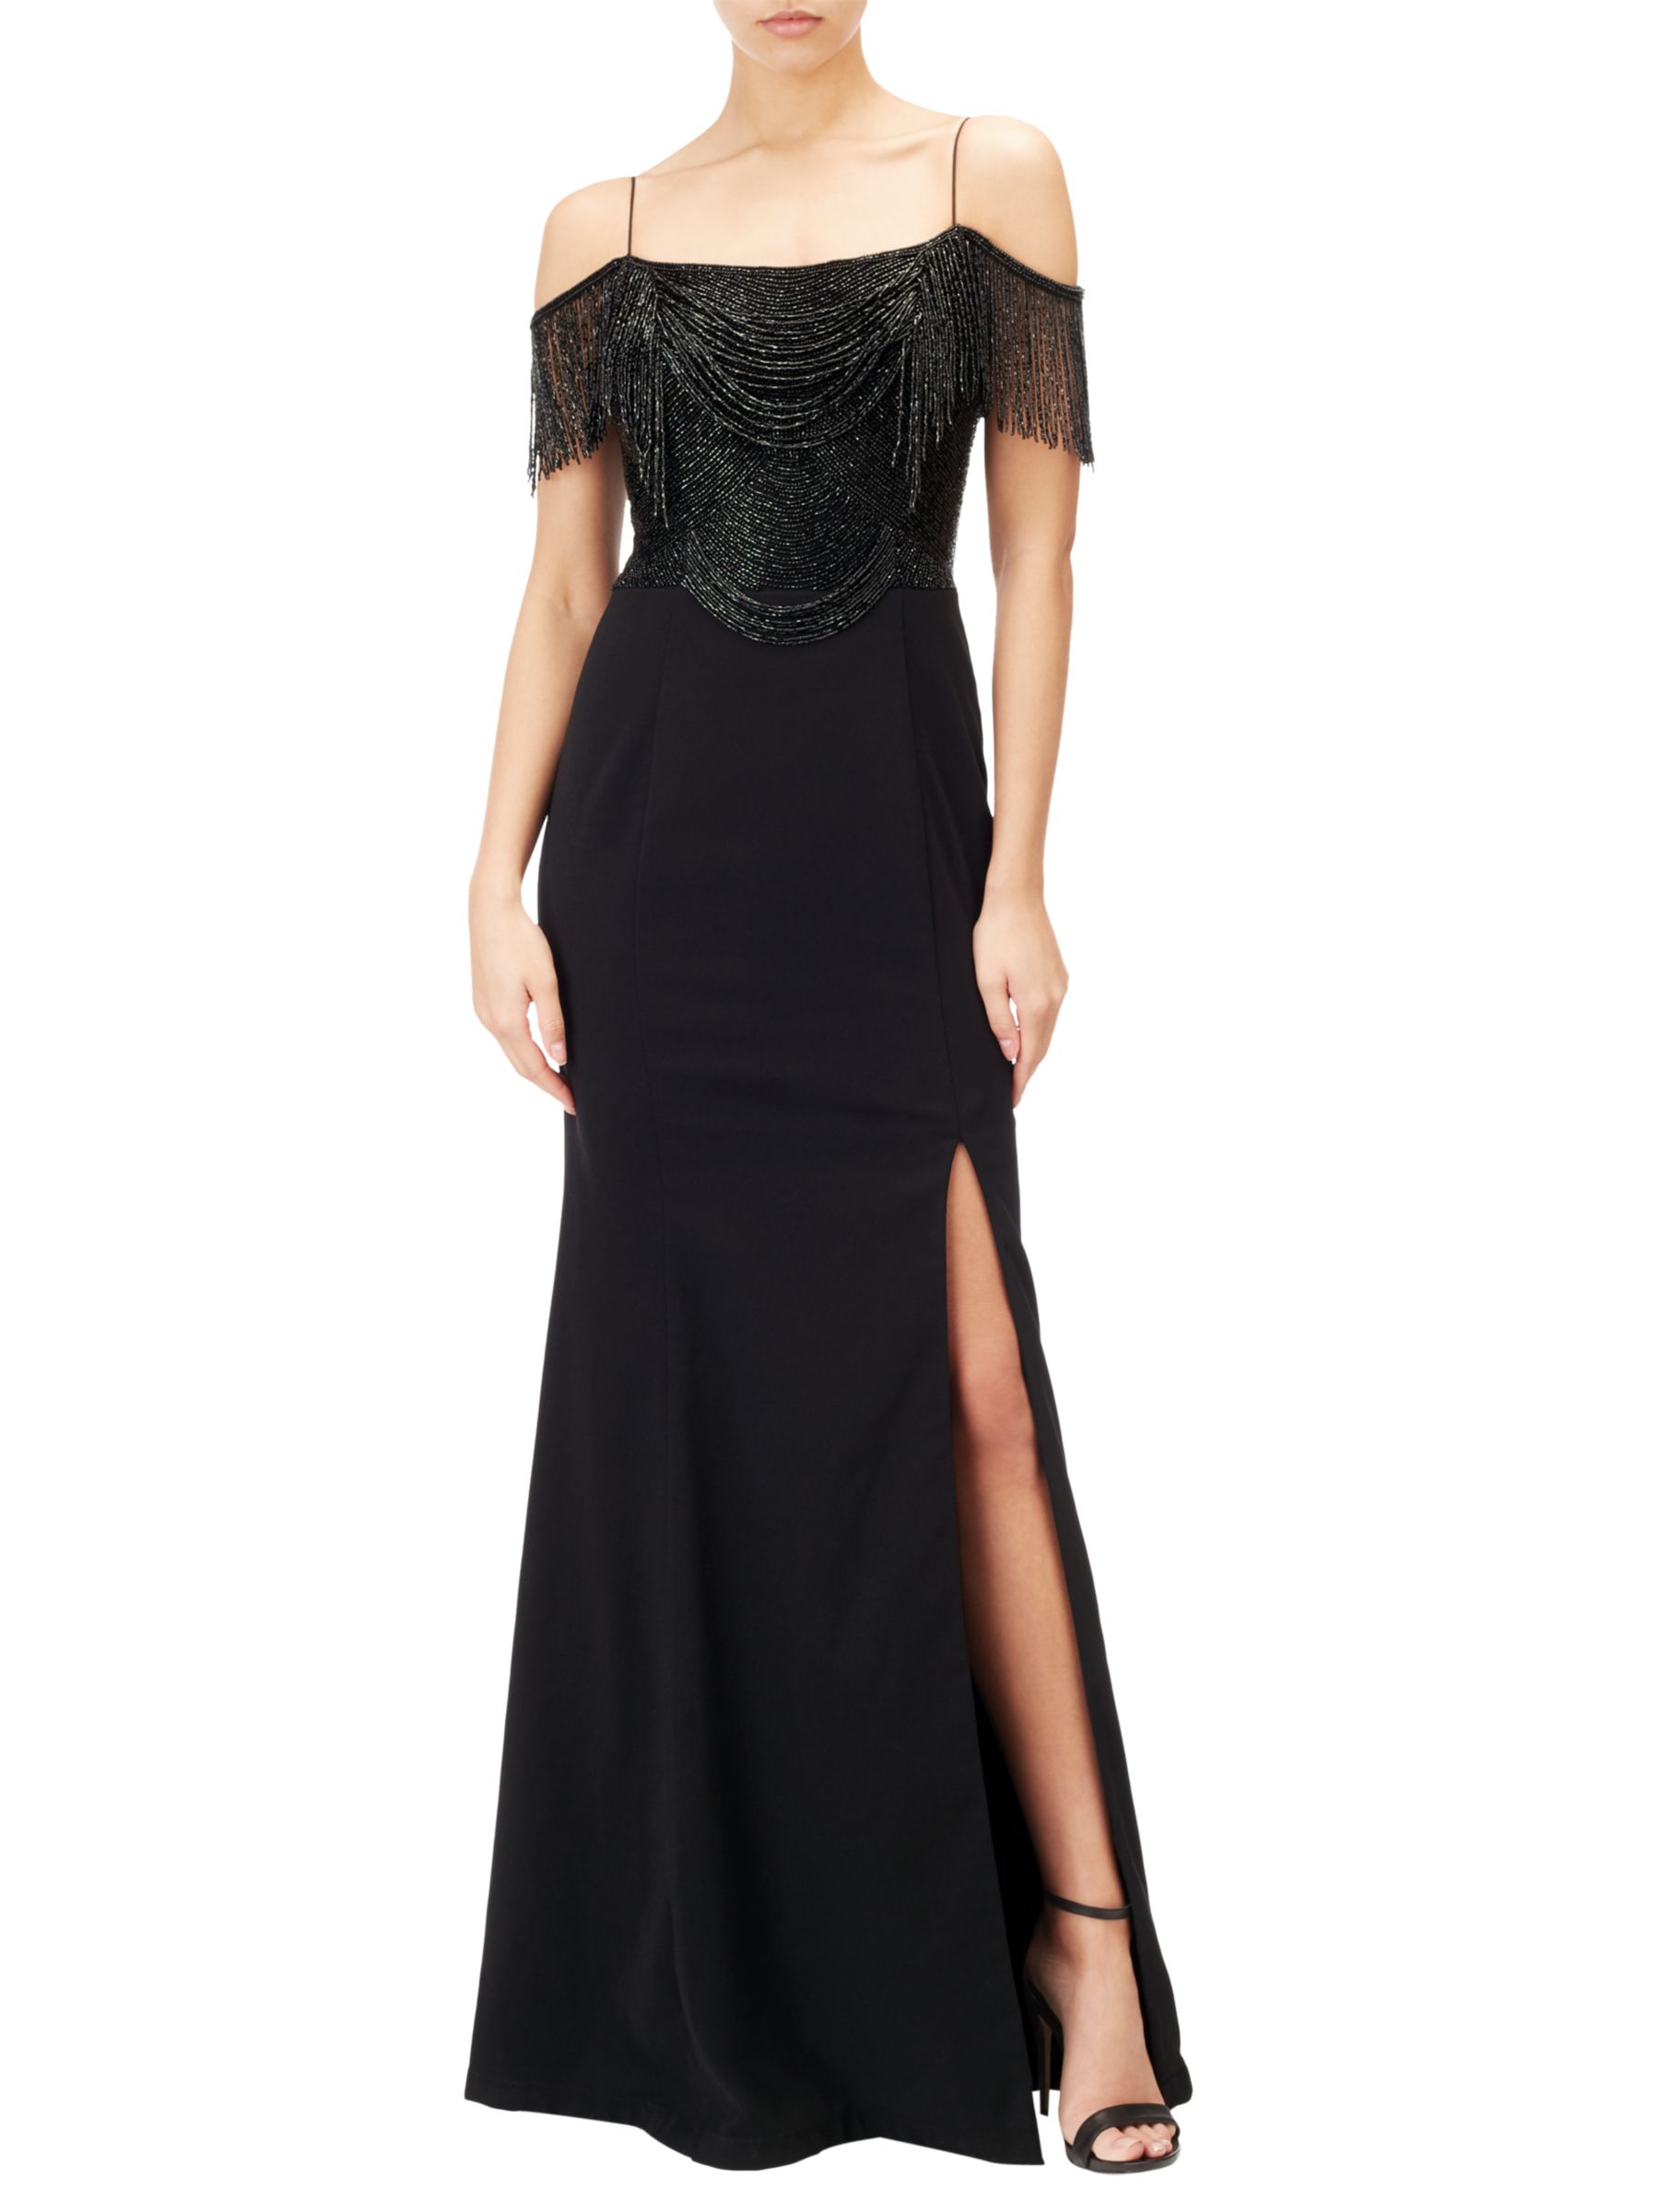 Adrianna Papell Beaded Fringe Dress, Black